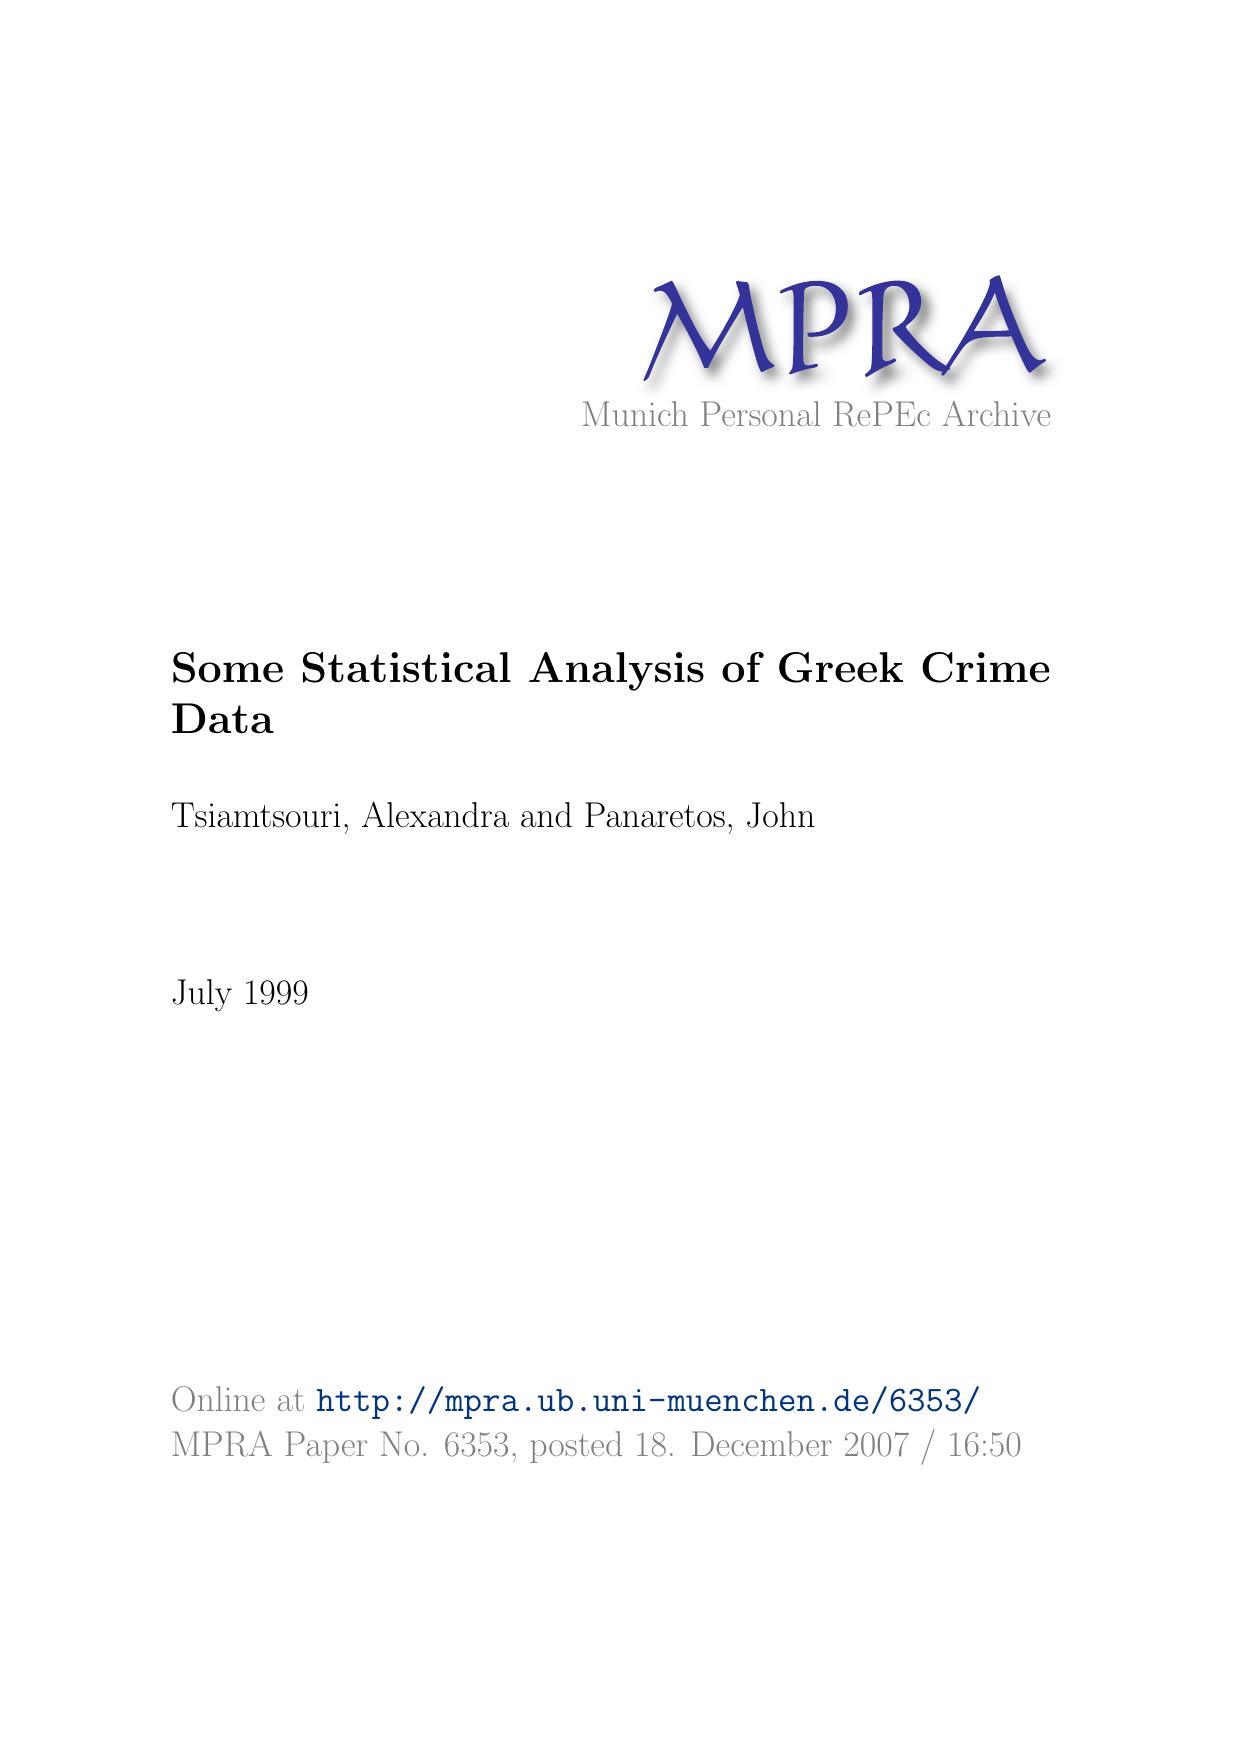 Some Statistical Analysis of Greek Crime Data, 1999